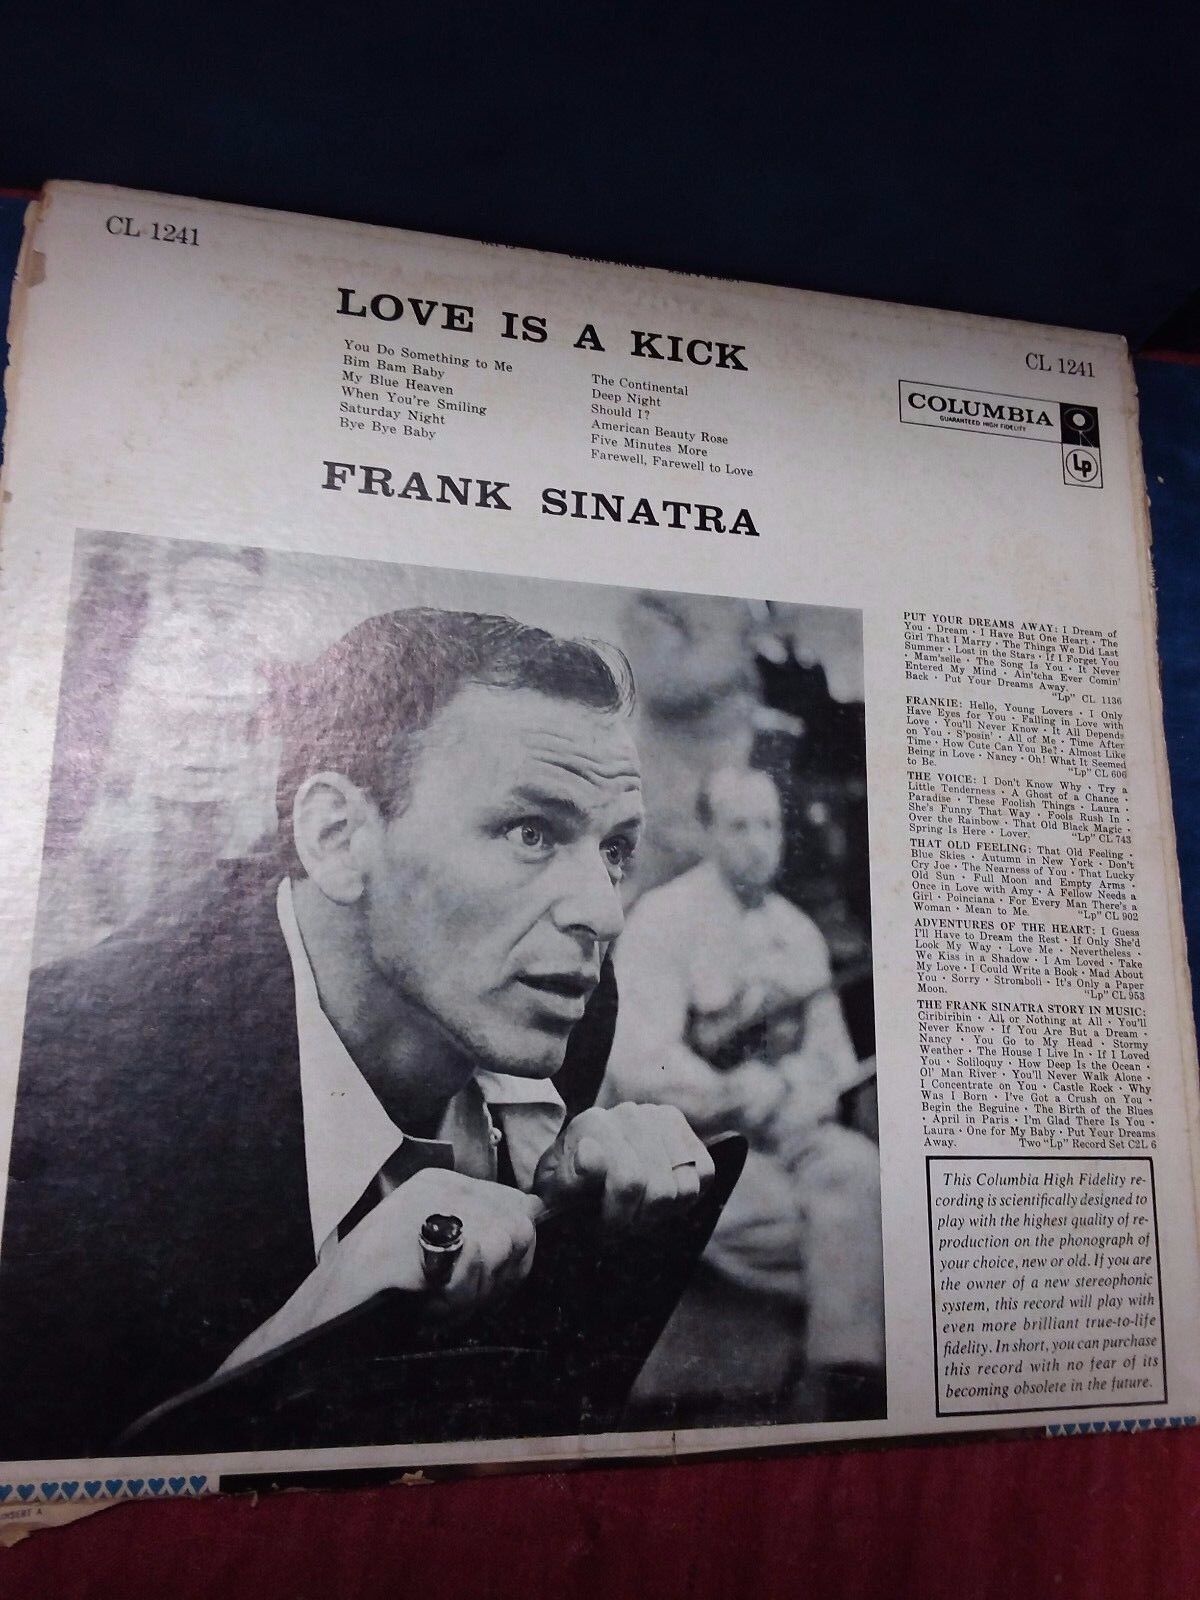 VINYL RECORD LP FRANK SINATRA LOVE IS A KICK